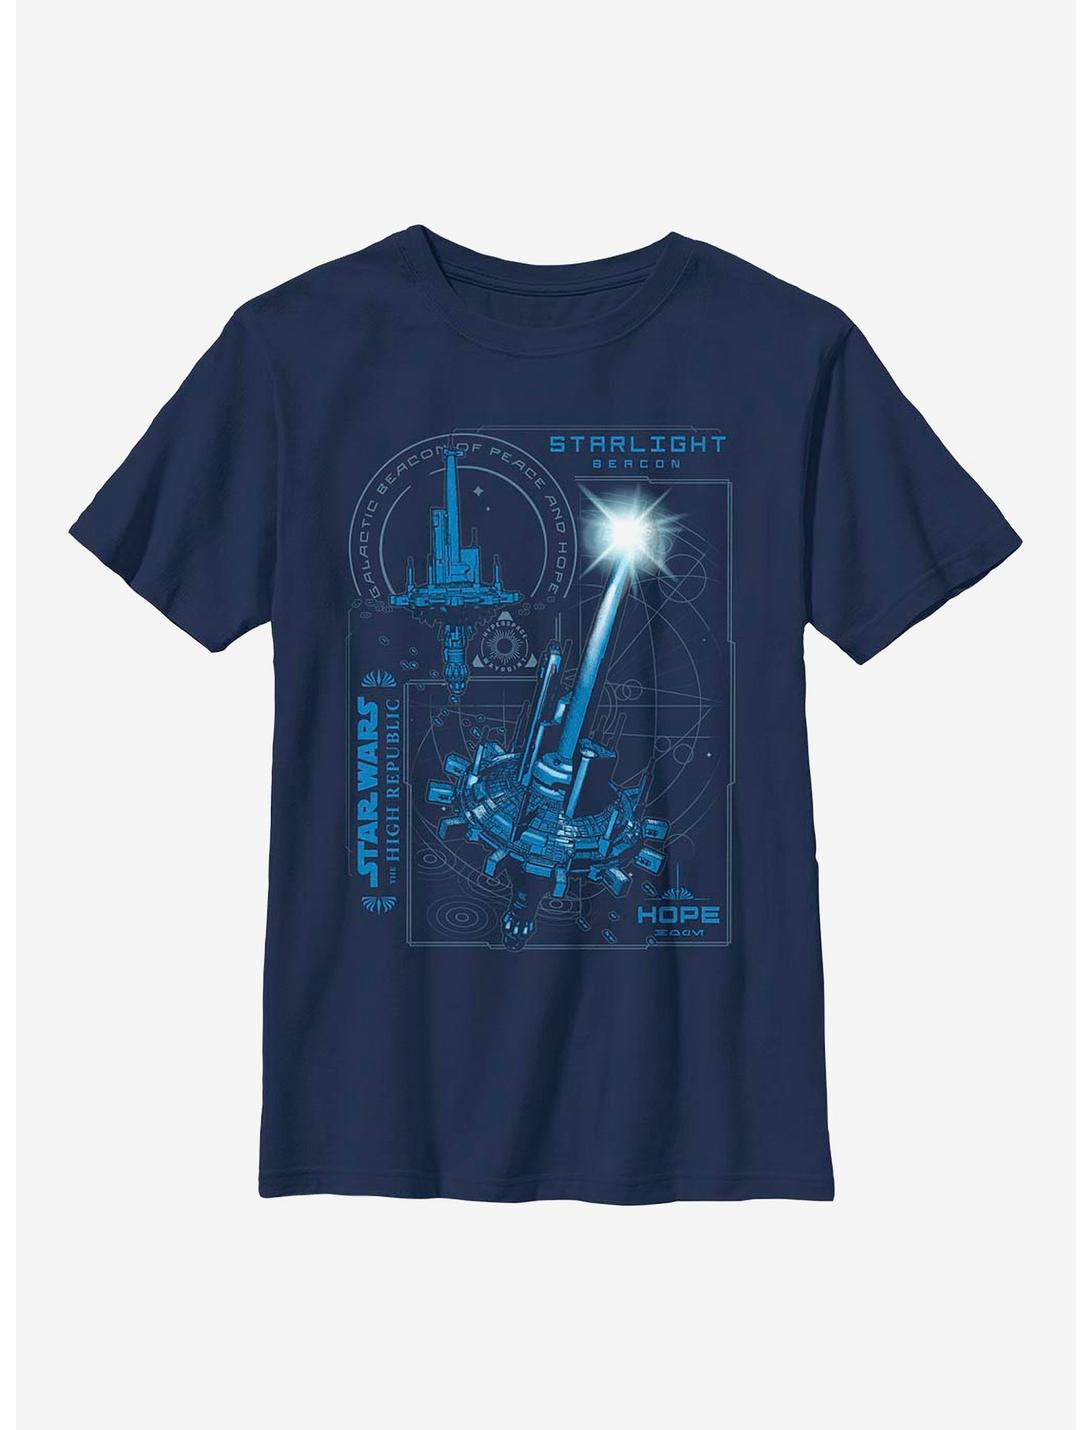 Star Wars: The High Republic Starlight Station Youth T-Shirt, NAVY, hi-res